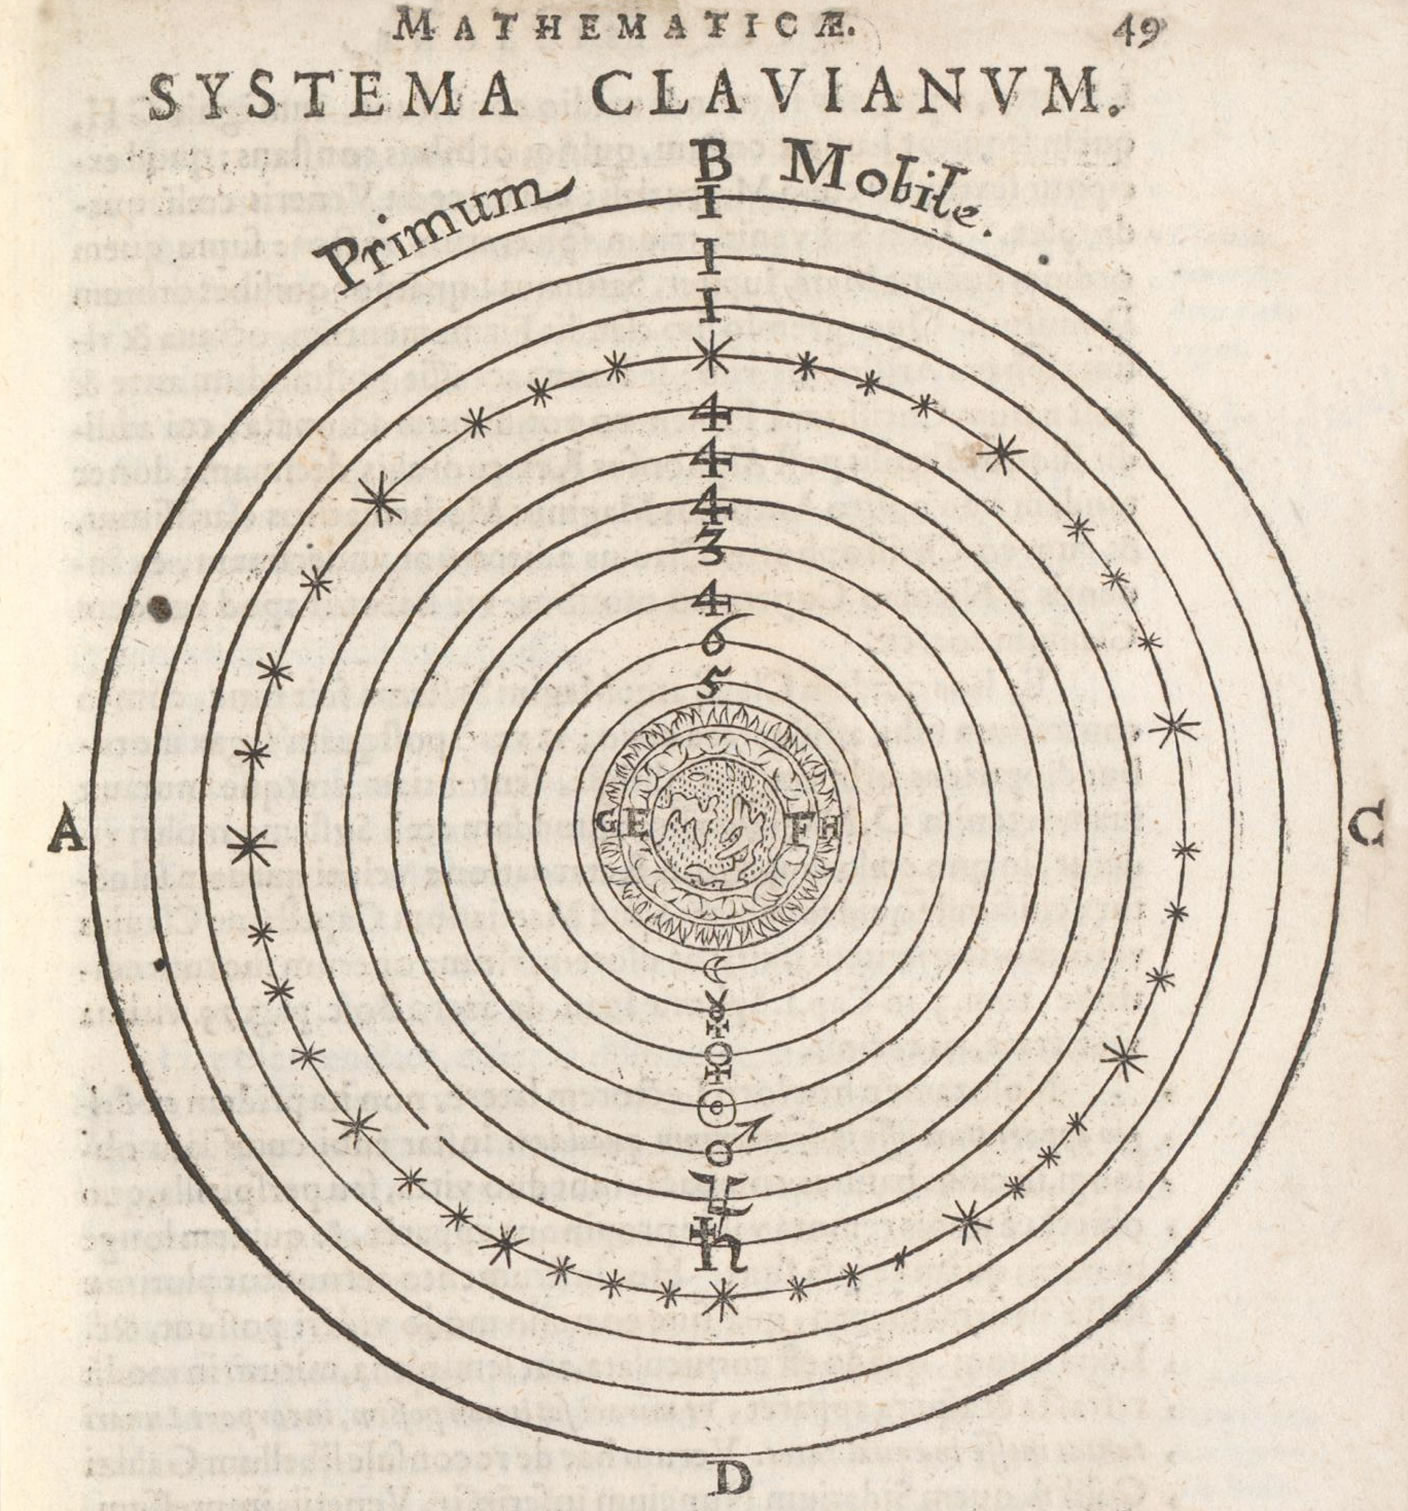 Christoph Scheiner, Disquisitiones mathematicae, 1614 Rare Books. Rar_4325, e-rara.ch